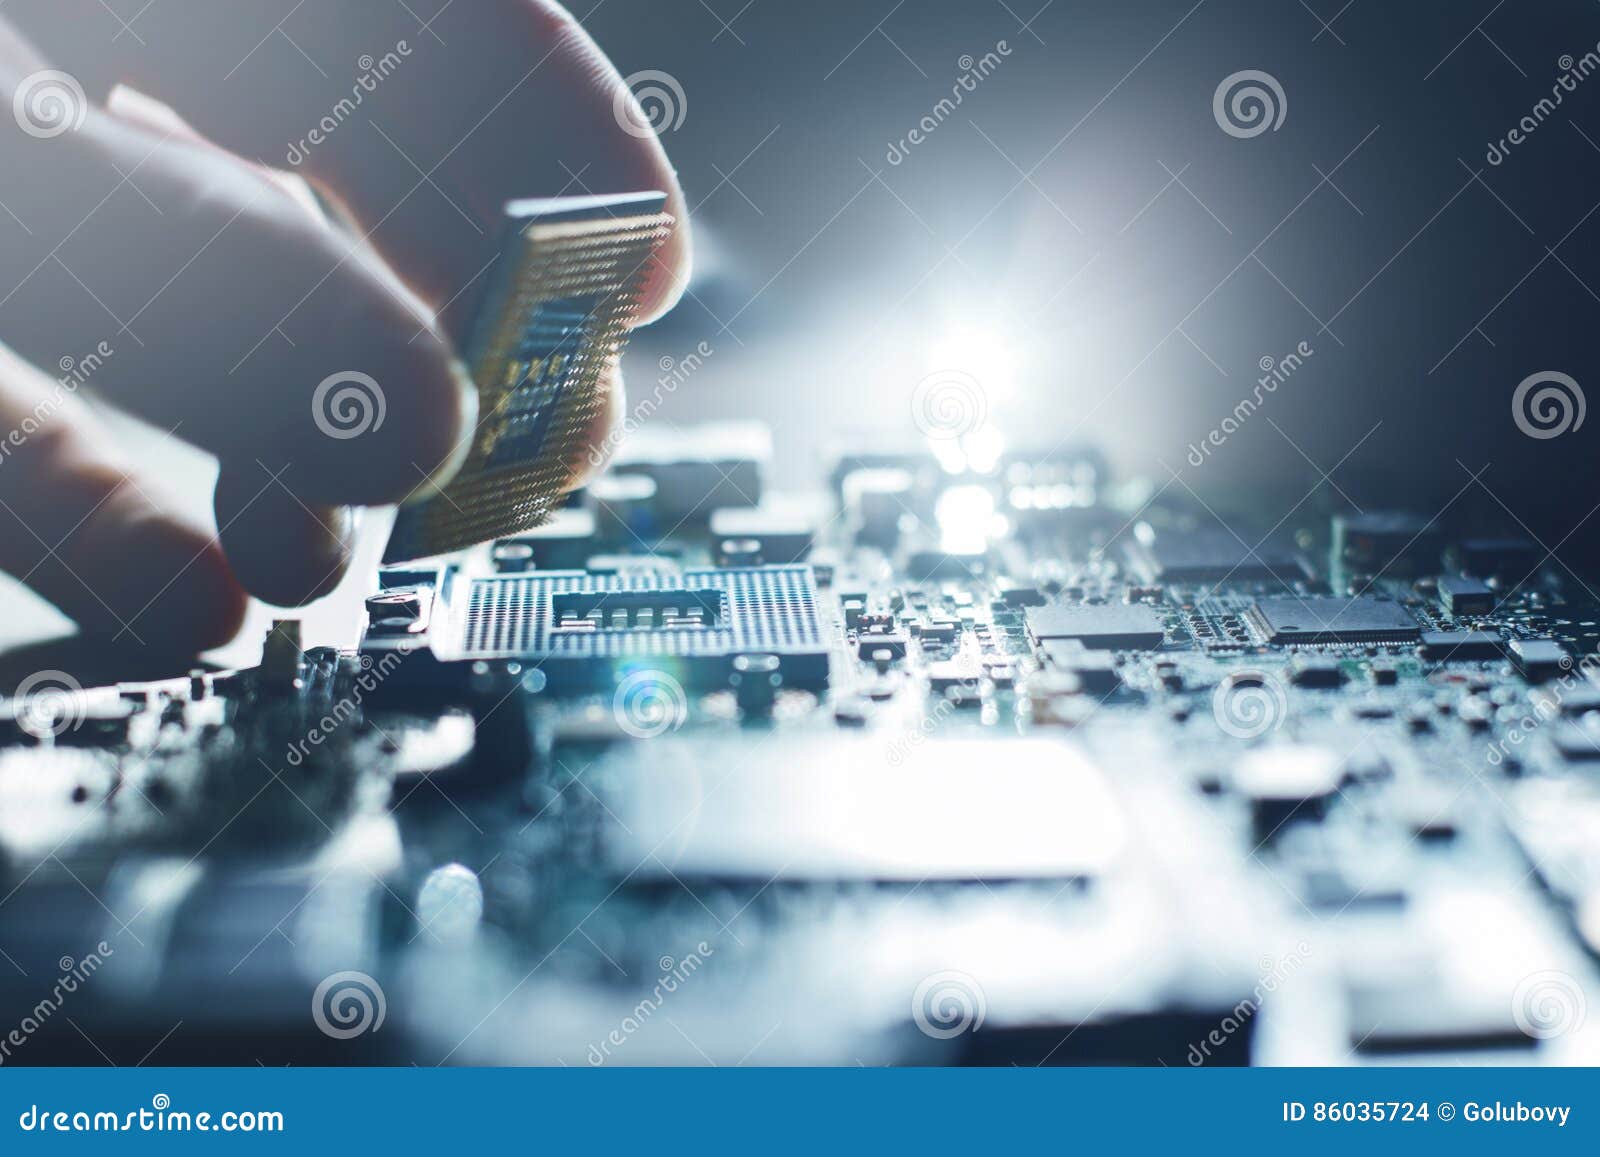 electronic engineer. maintenance computer cpu hardware